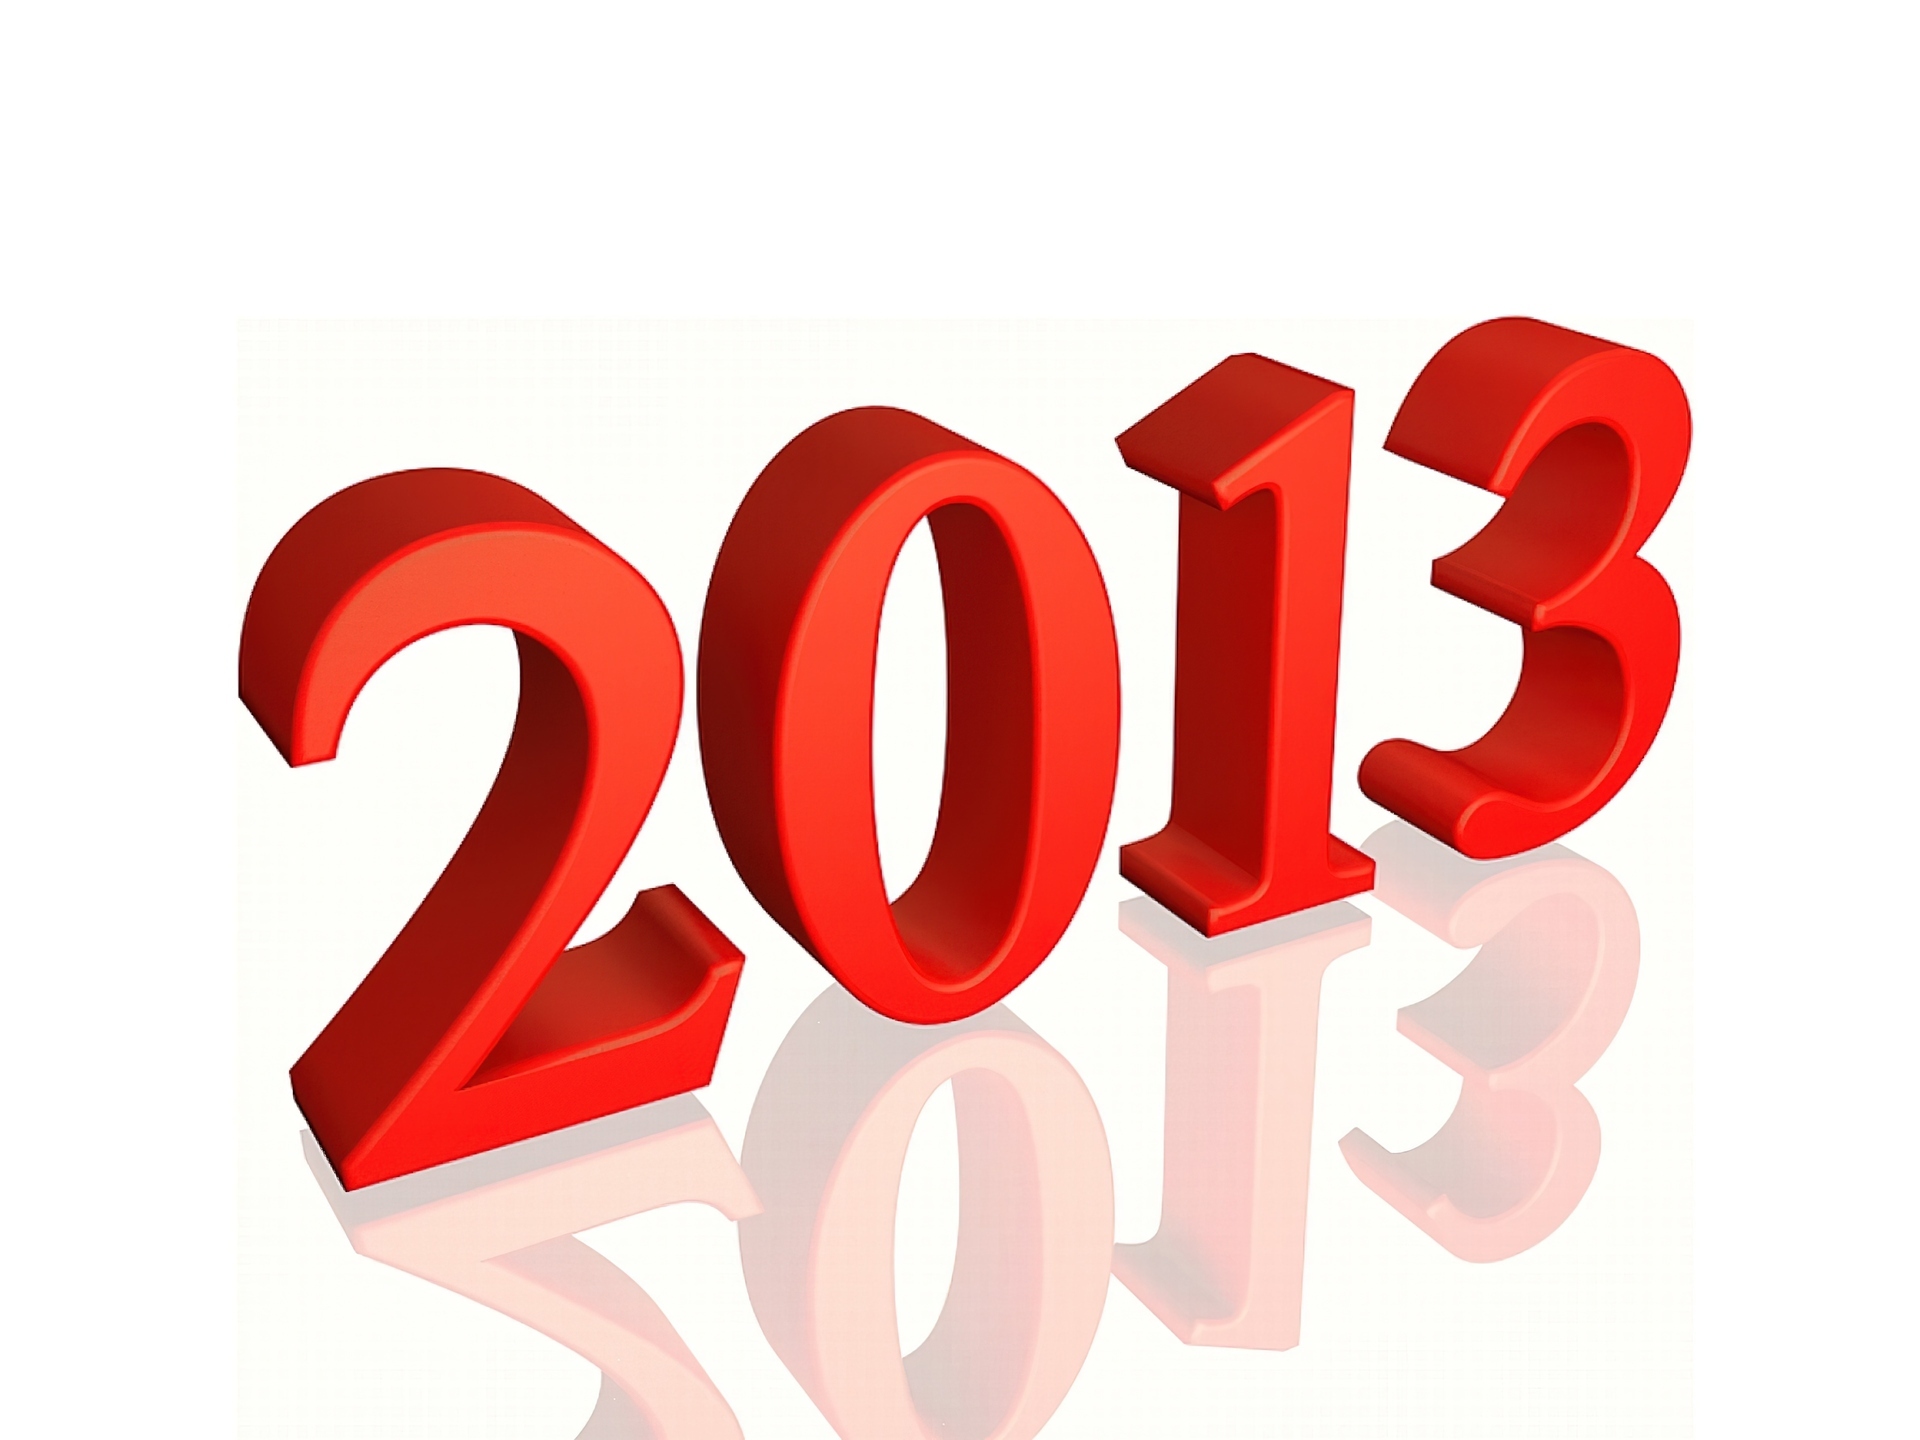 Nowy Rok, 2013, Cyfry